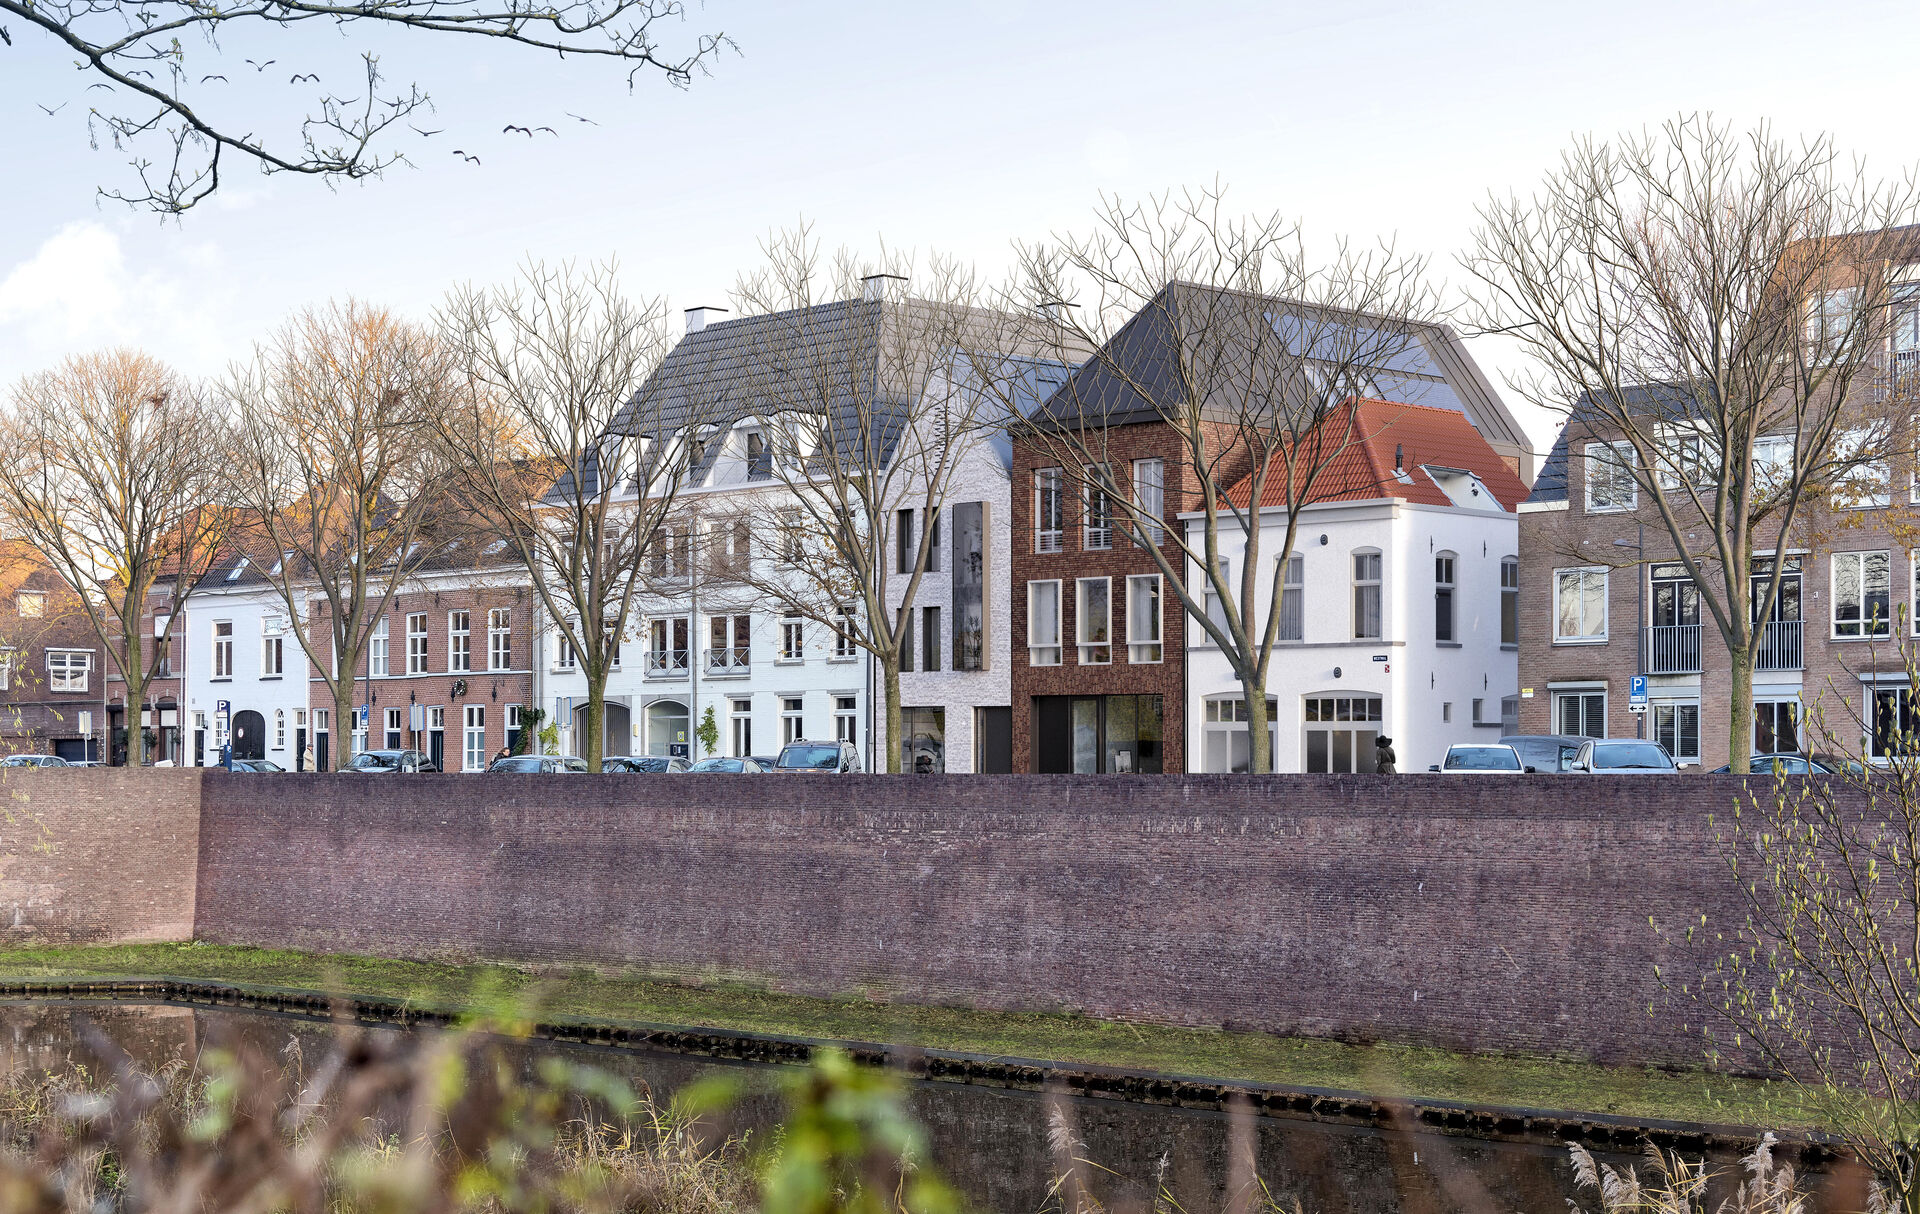 City villas fill the void in Bossche city center